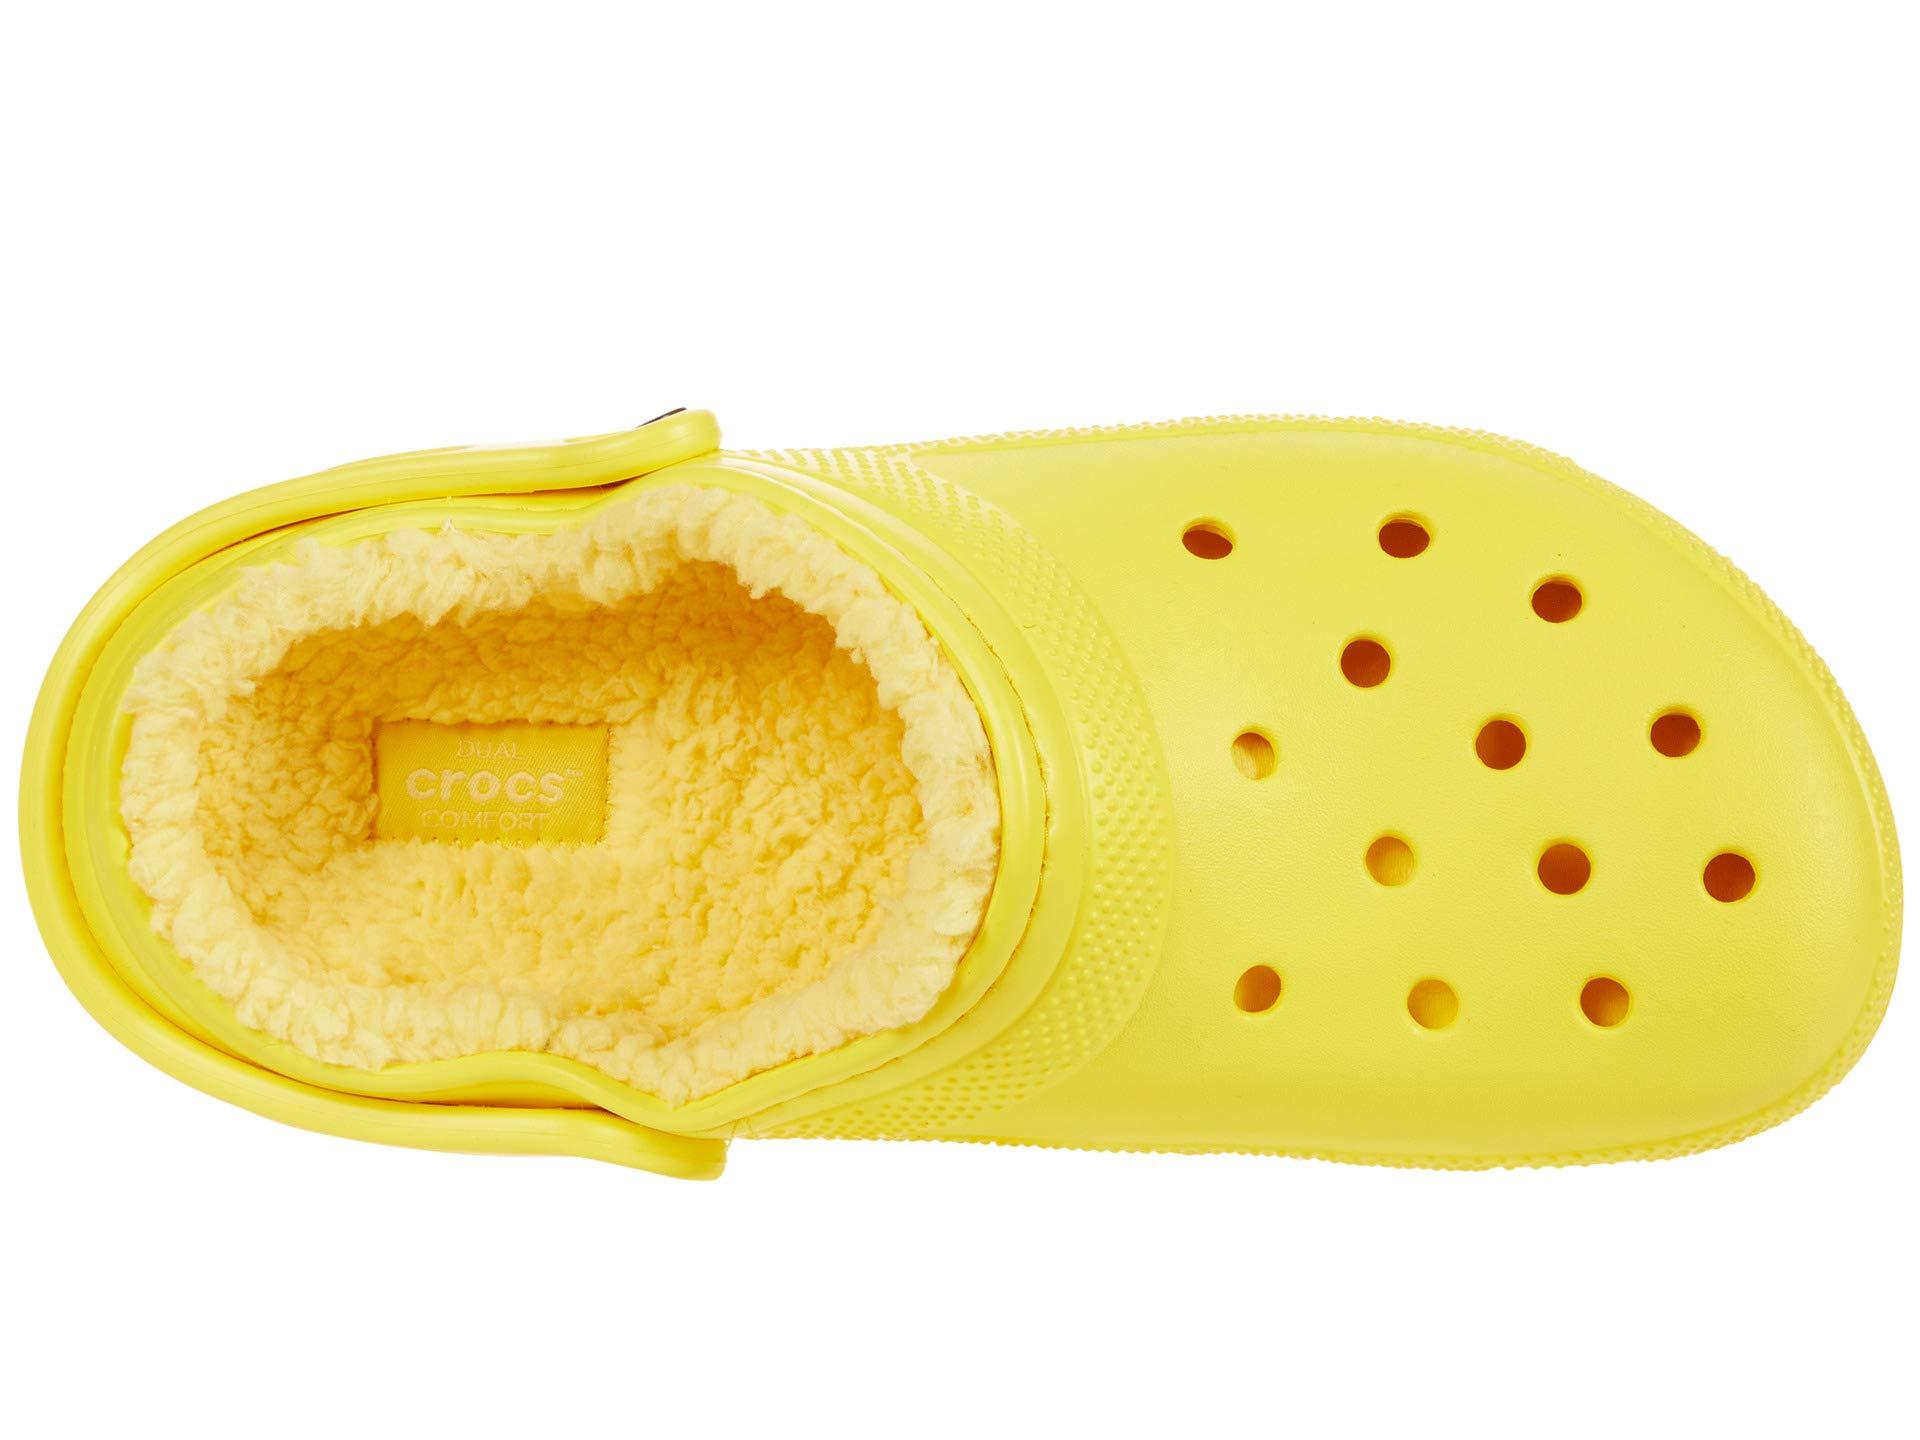 fur crocs yellow